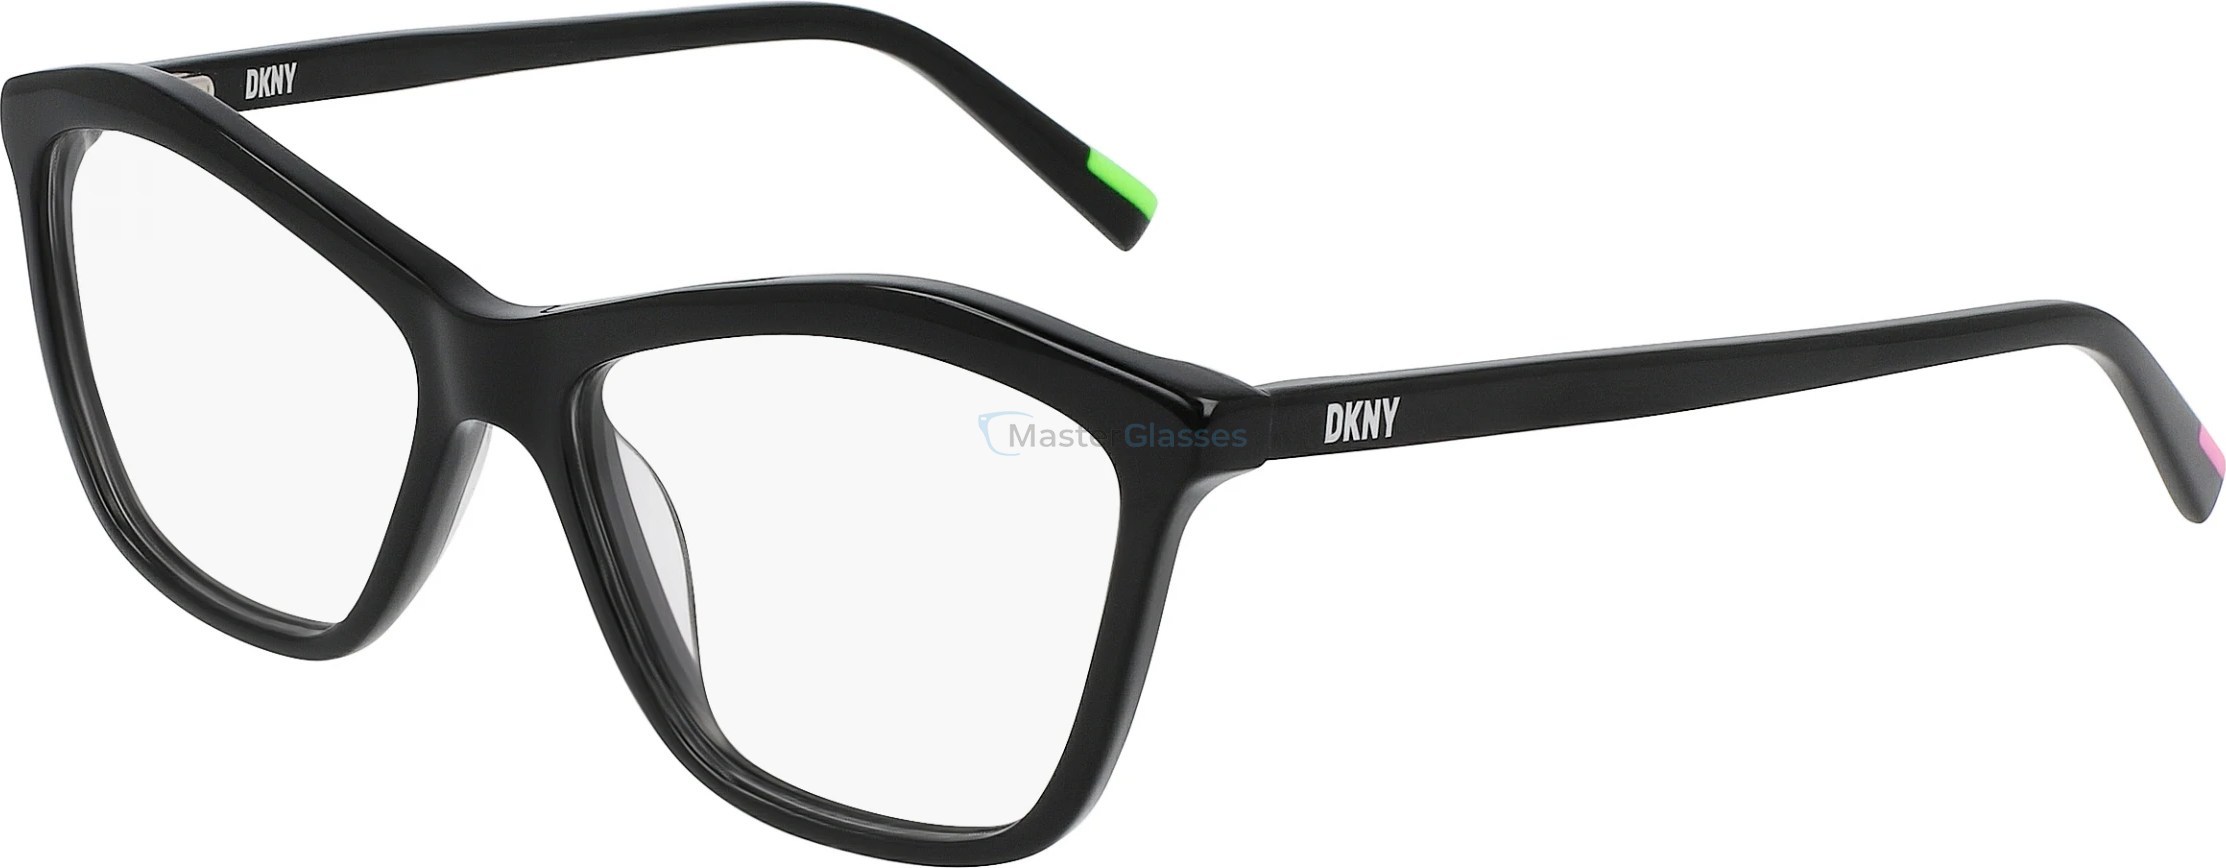  DKNY DK5056 001,  BLACK, CLEAR